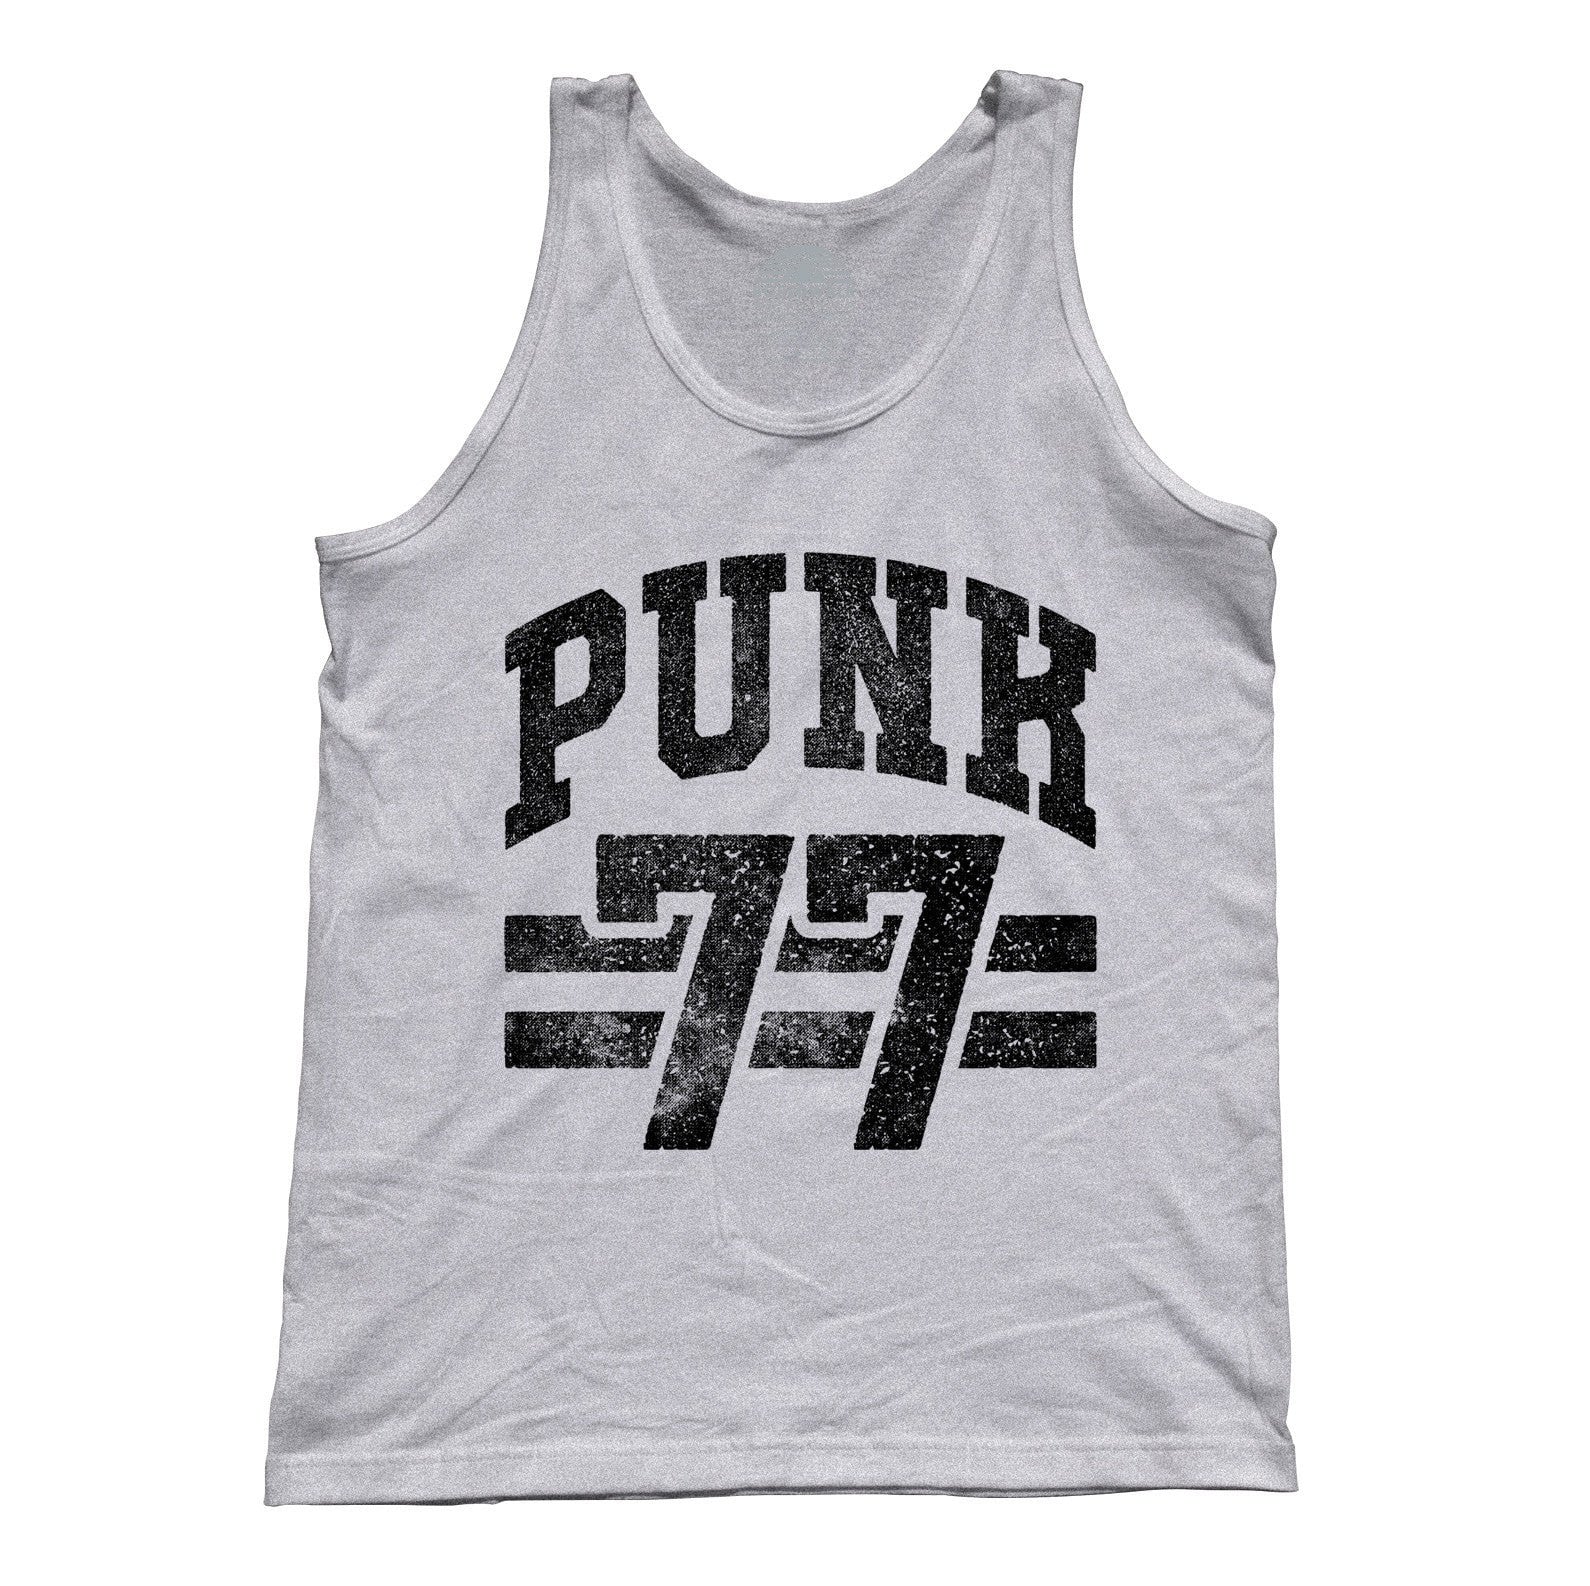 Unisex Punk 77 Tank Top - Alternative Music Punk Rock Grunge